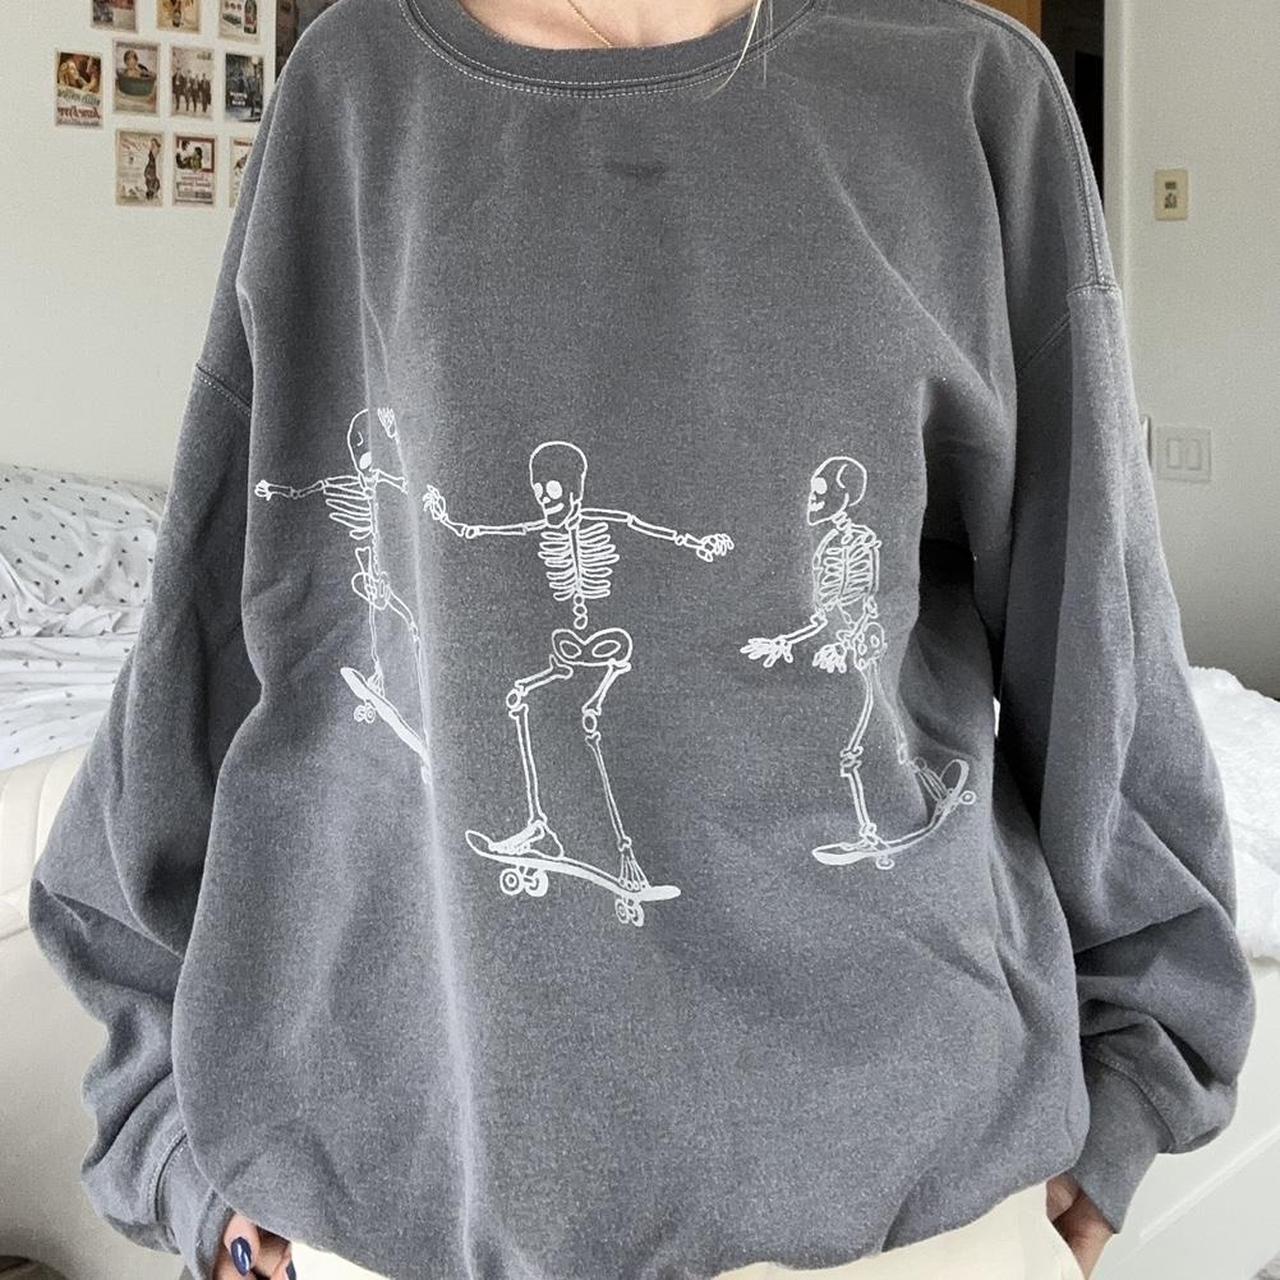 Urban Outfitters Women's Grey Sweatshirt